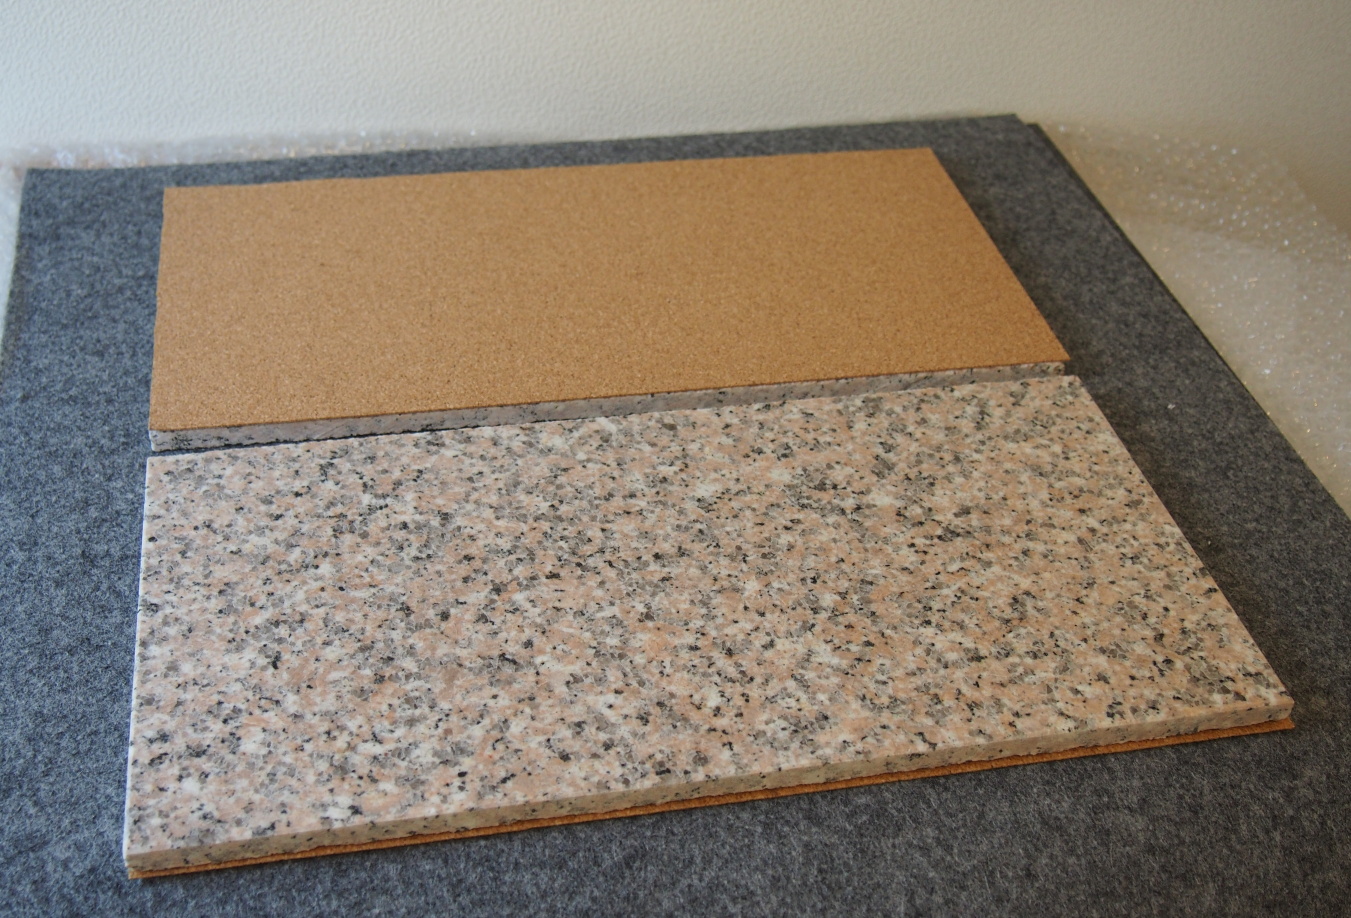 6. Granite boards and cork sheet